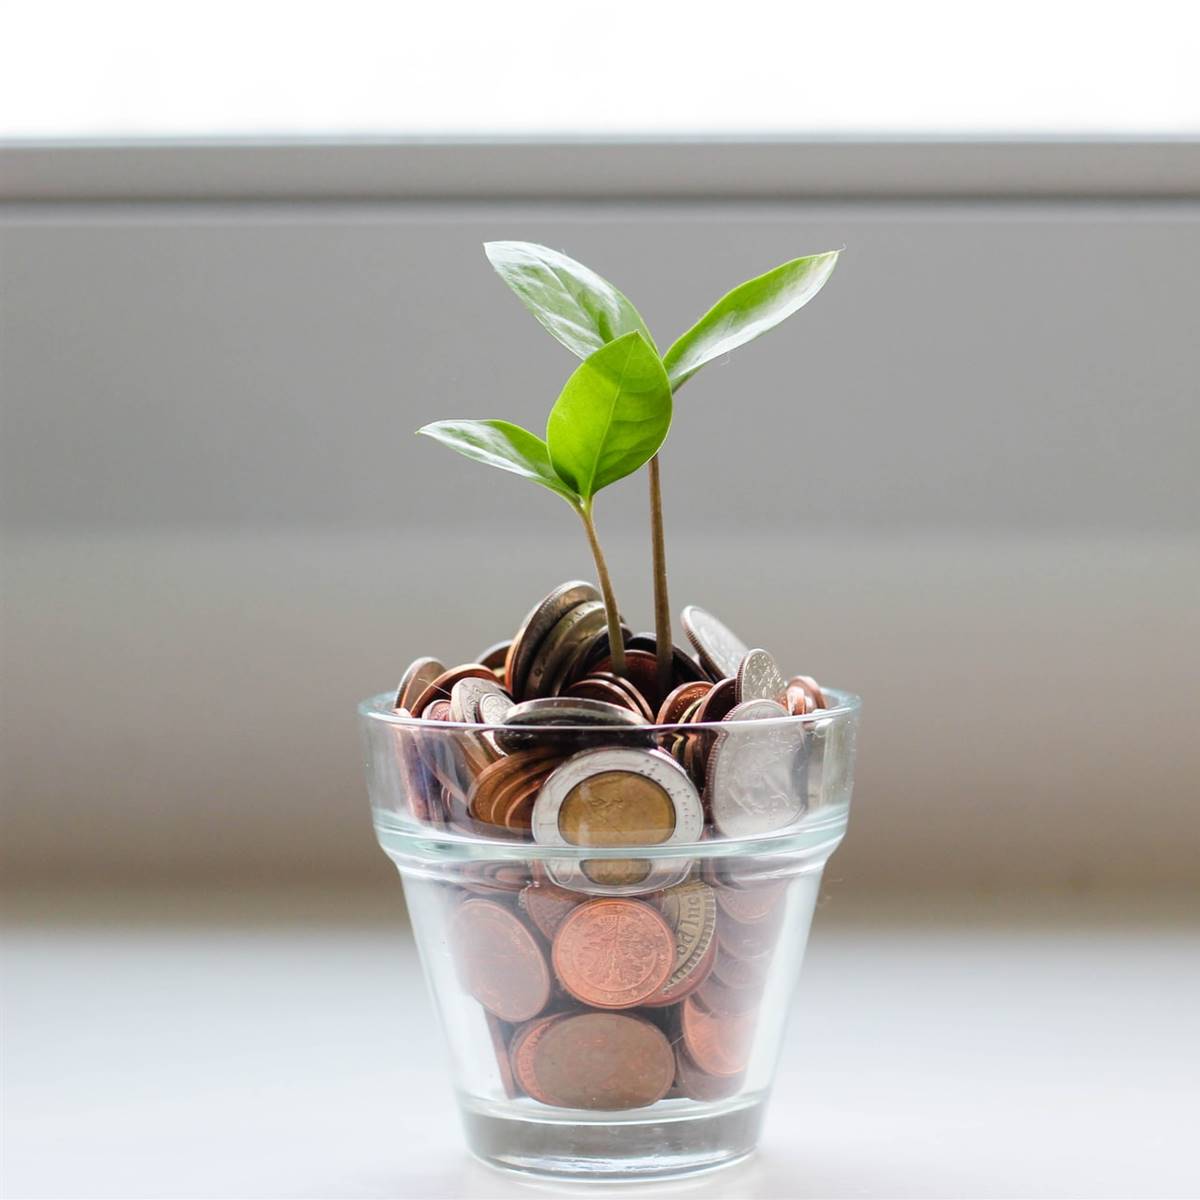 Planta creciendo entre monedas